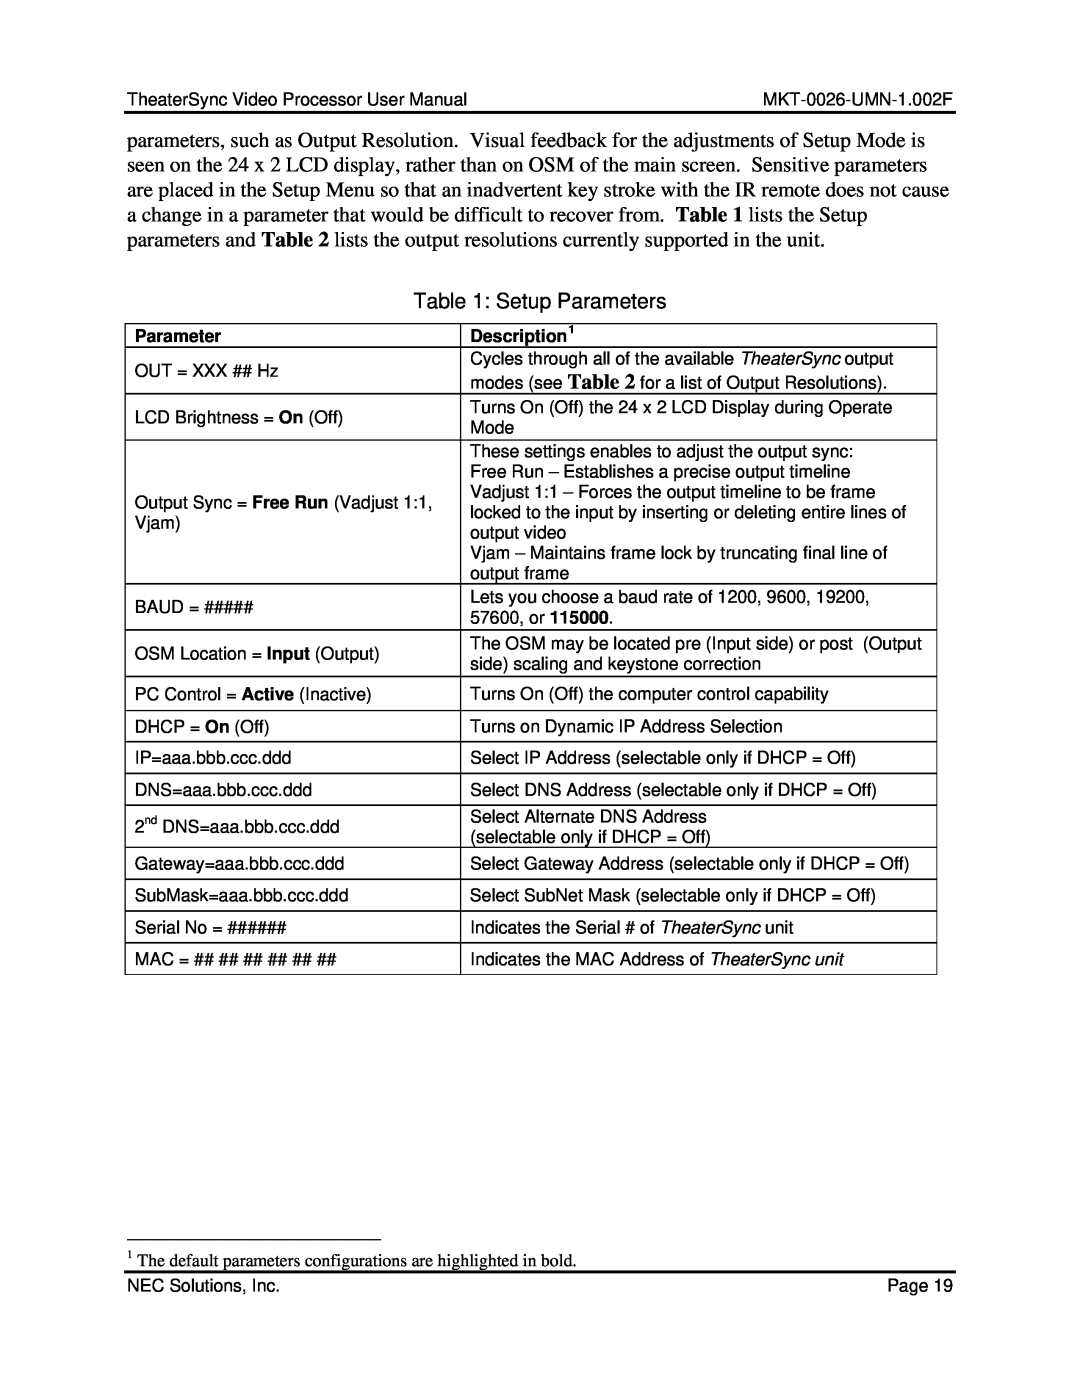 NEC TheaterSync Video Processor user manual Setup Parameters, Description1 